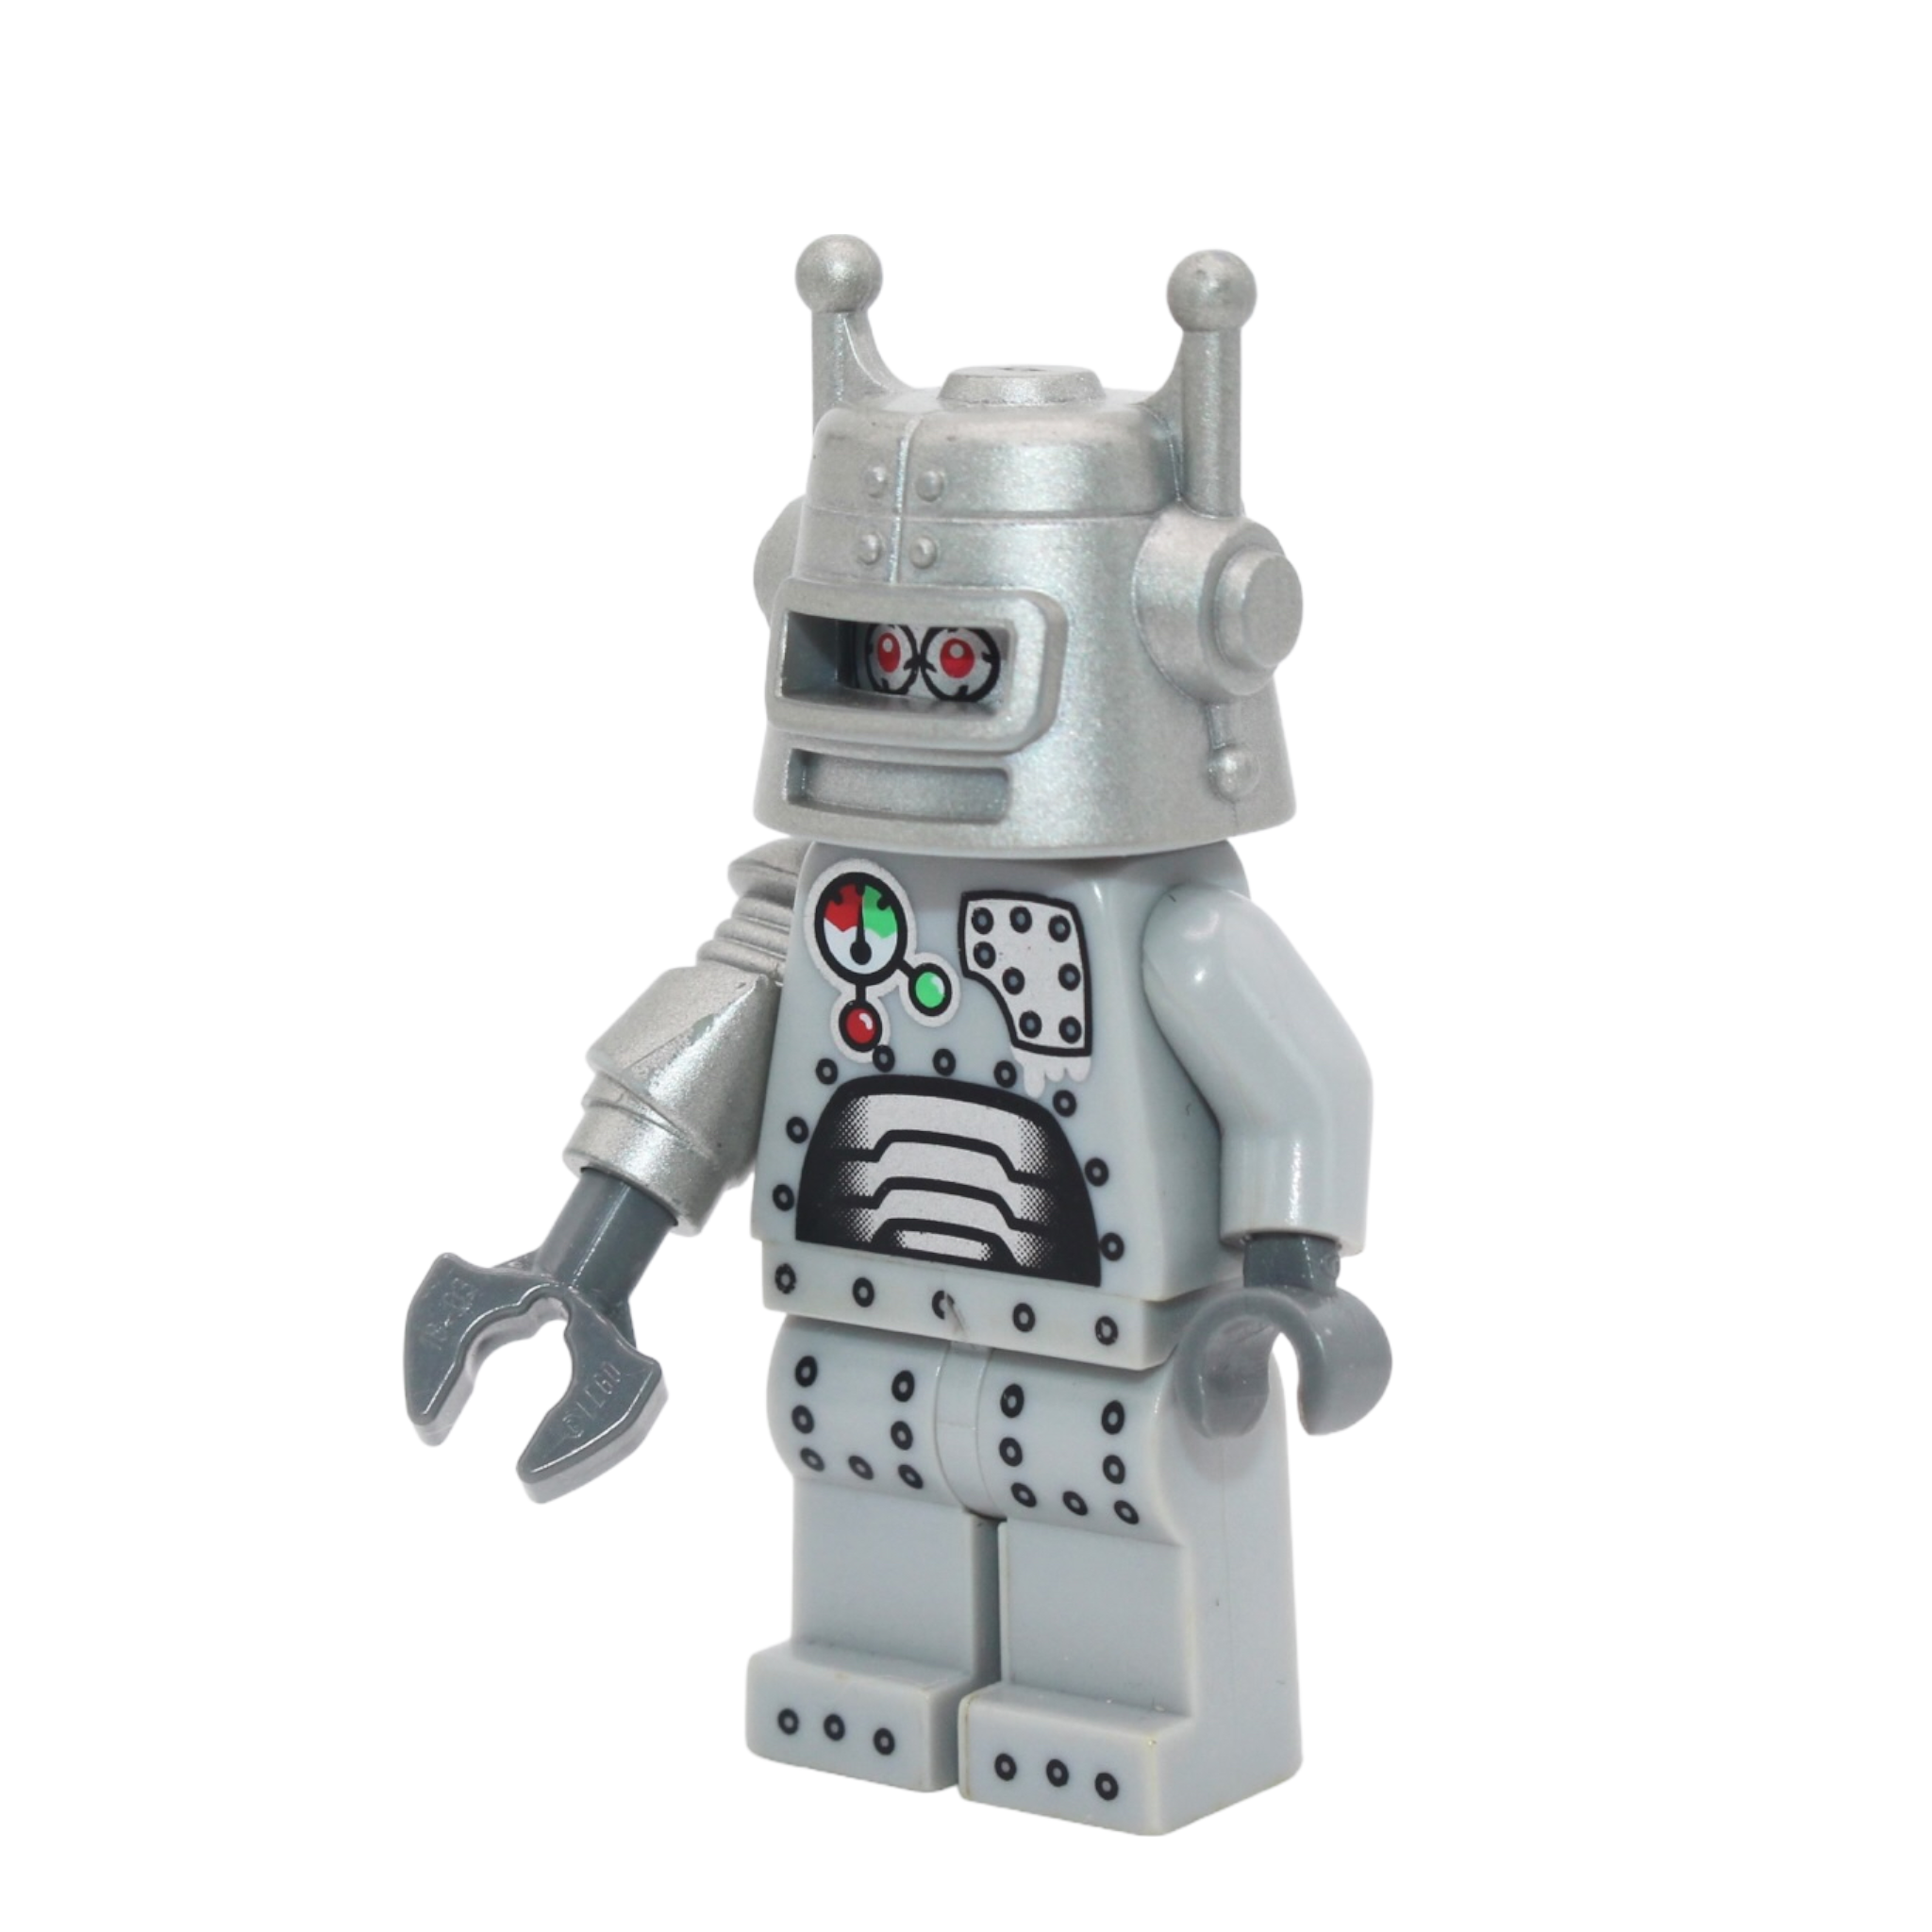 LEGO Series 1: Robot